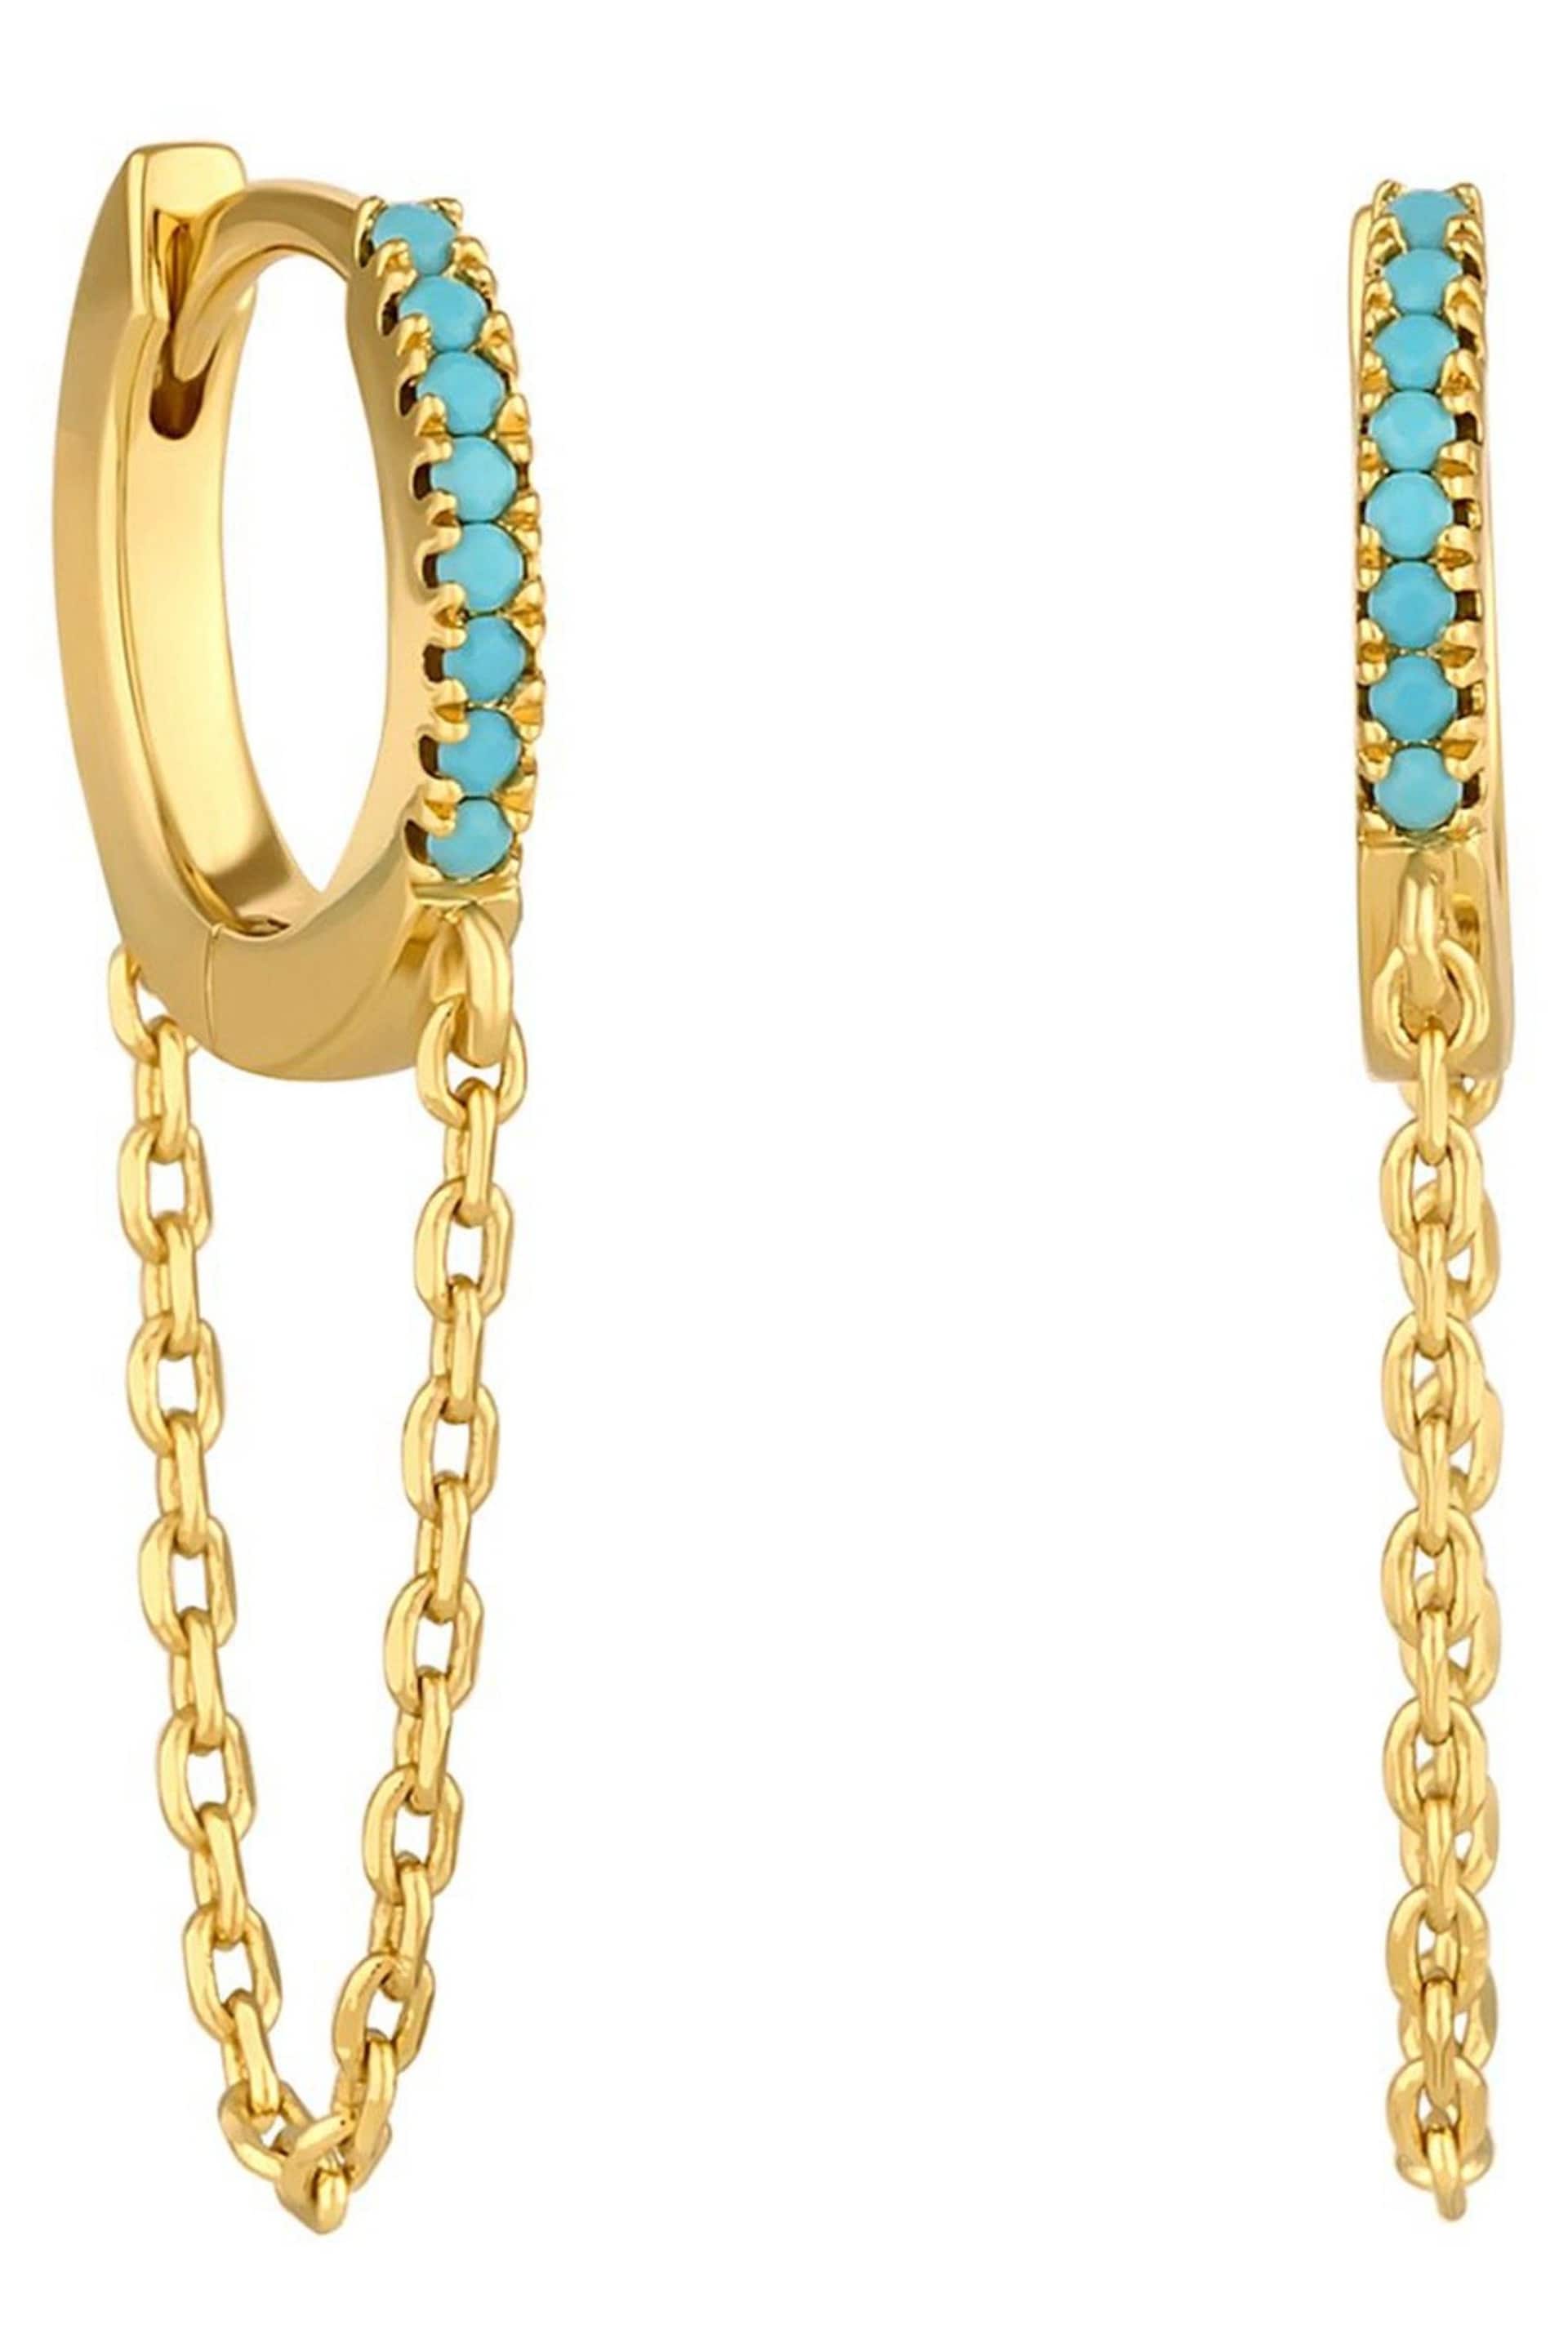 Inicio Gold Tone Chain Hoop Earrings - Image 1 of 3